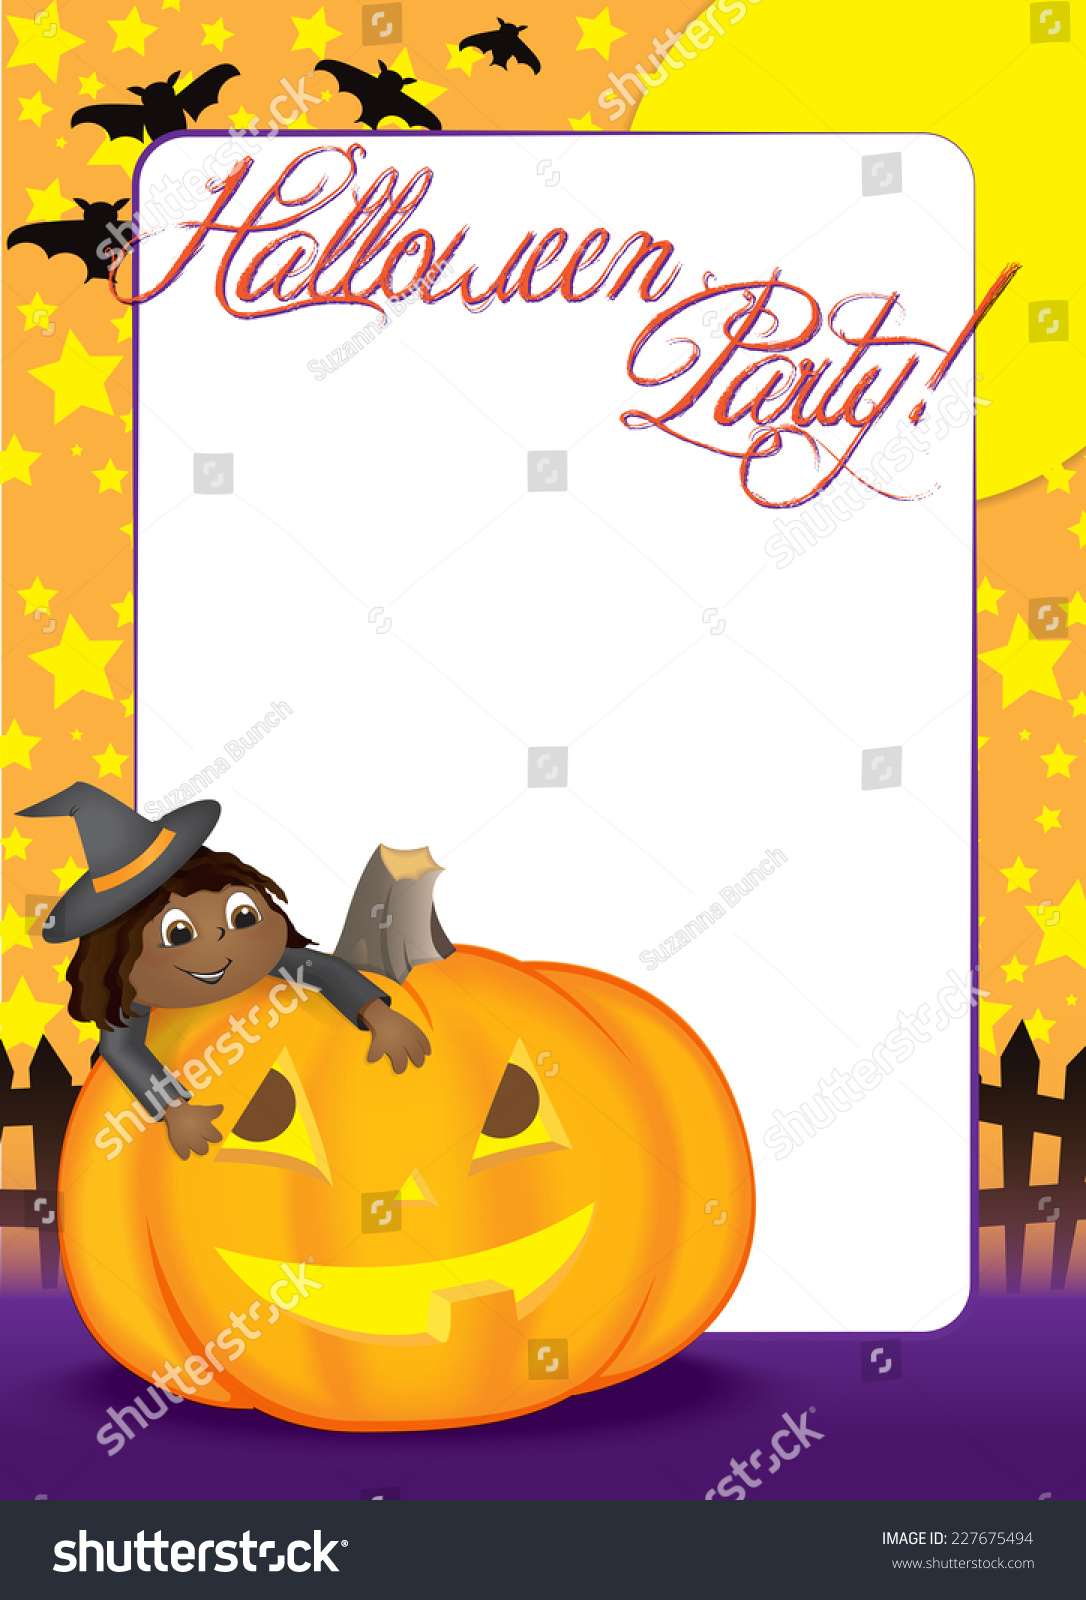 blank-halloween-party-invitation-holiday-flyer-stock-vector-227675494-shutterstock